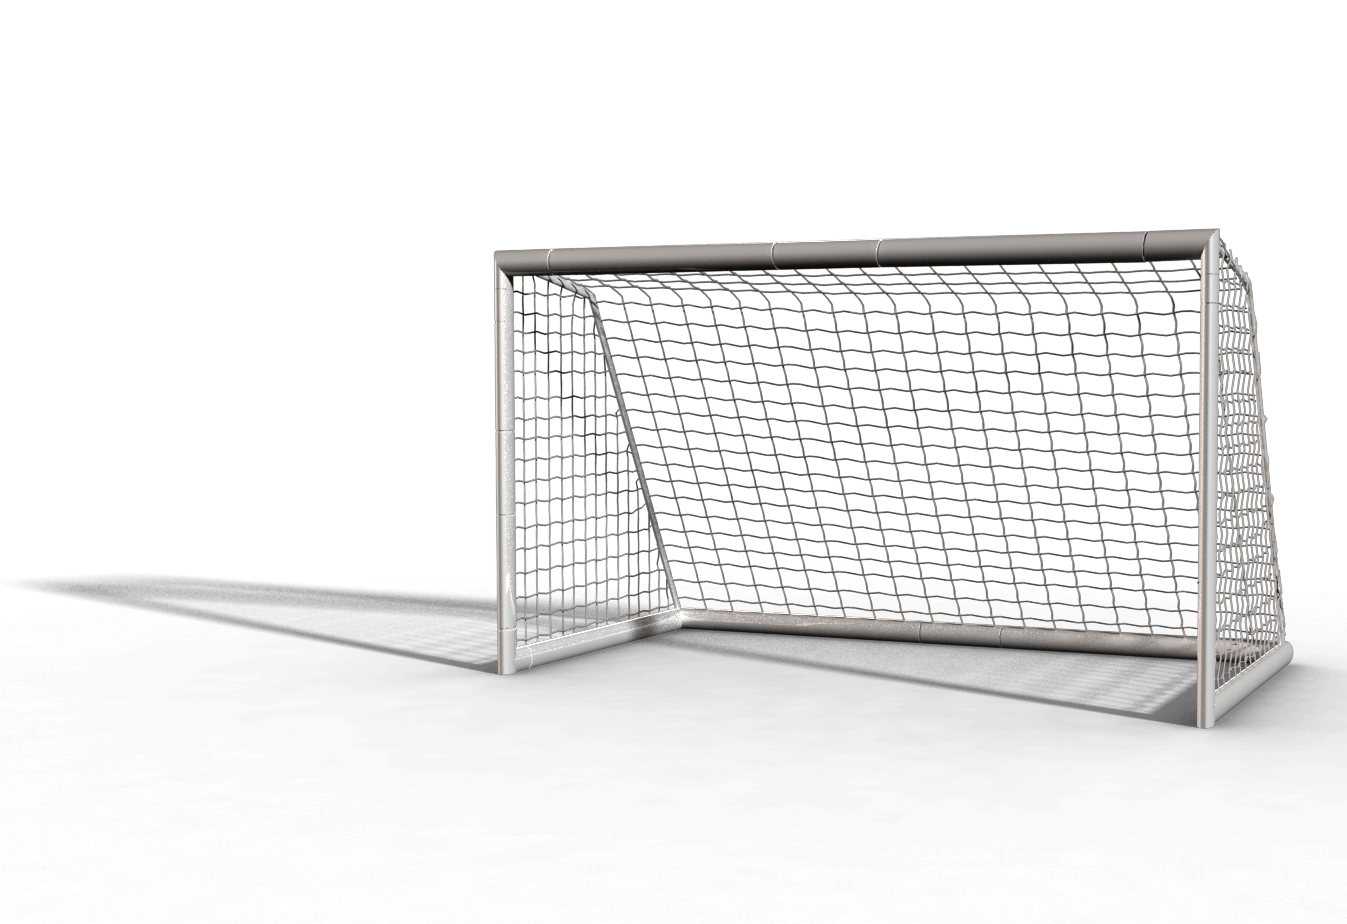 Football png images free. Goal clipart soccer goalie net